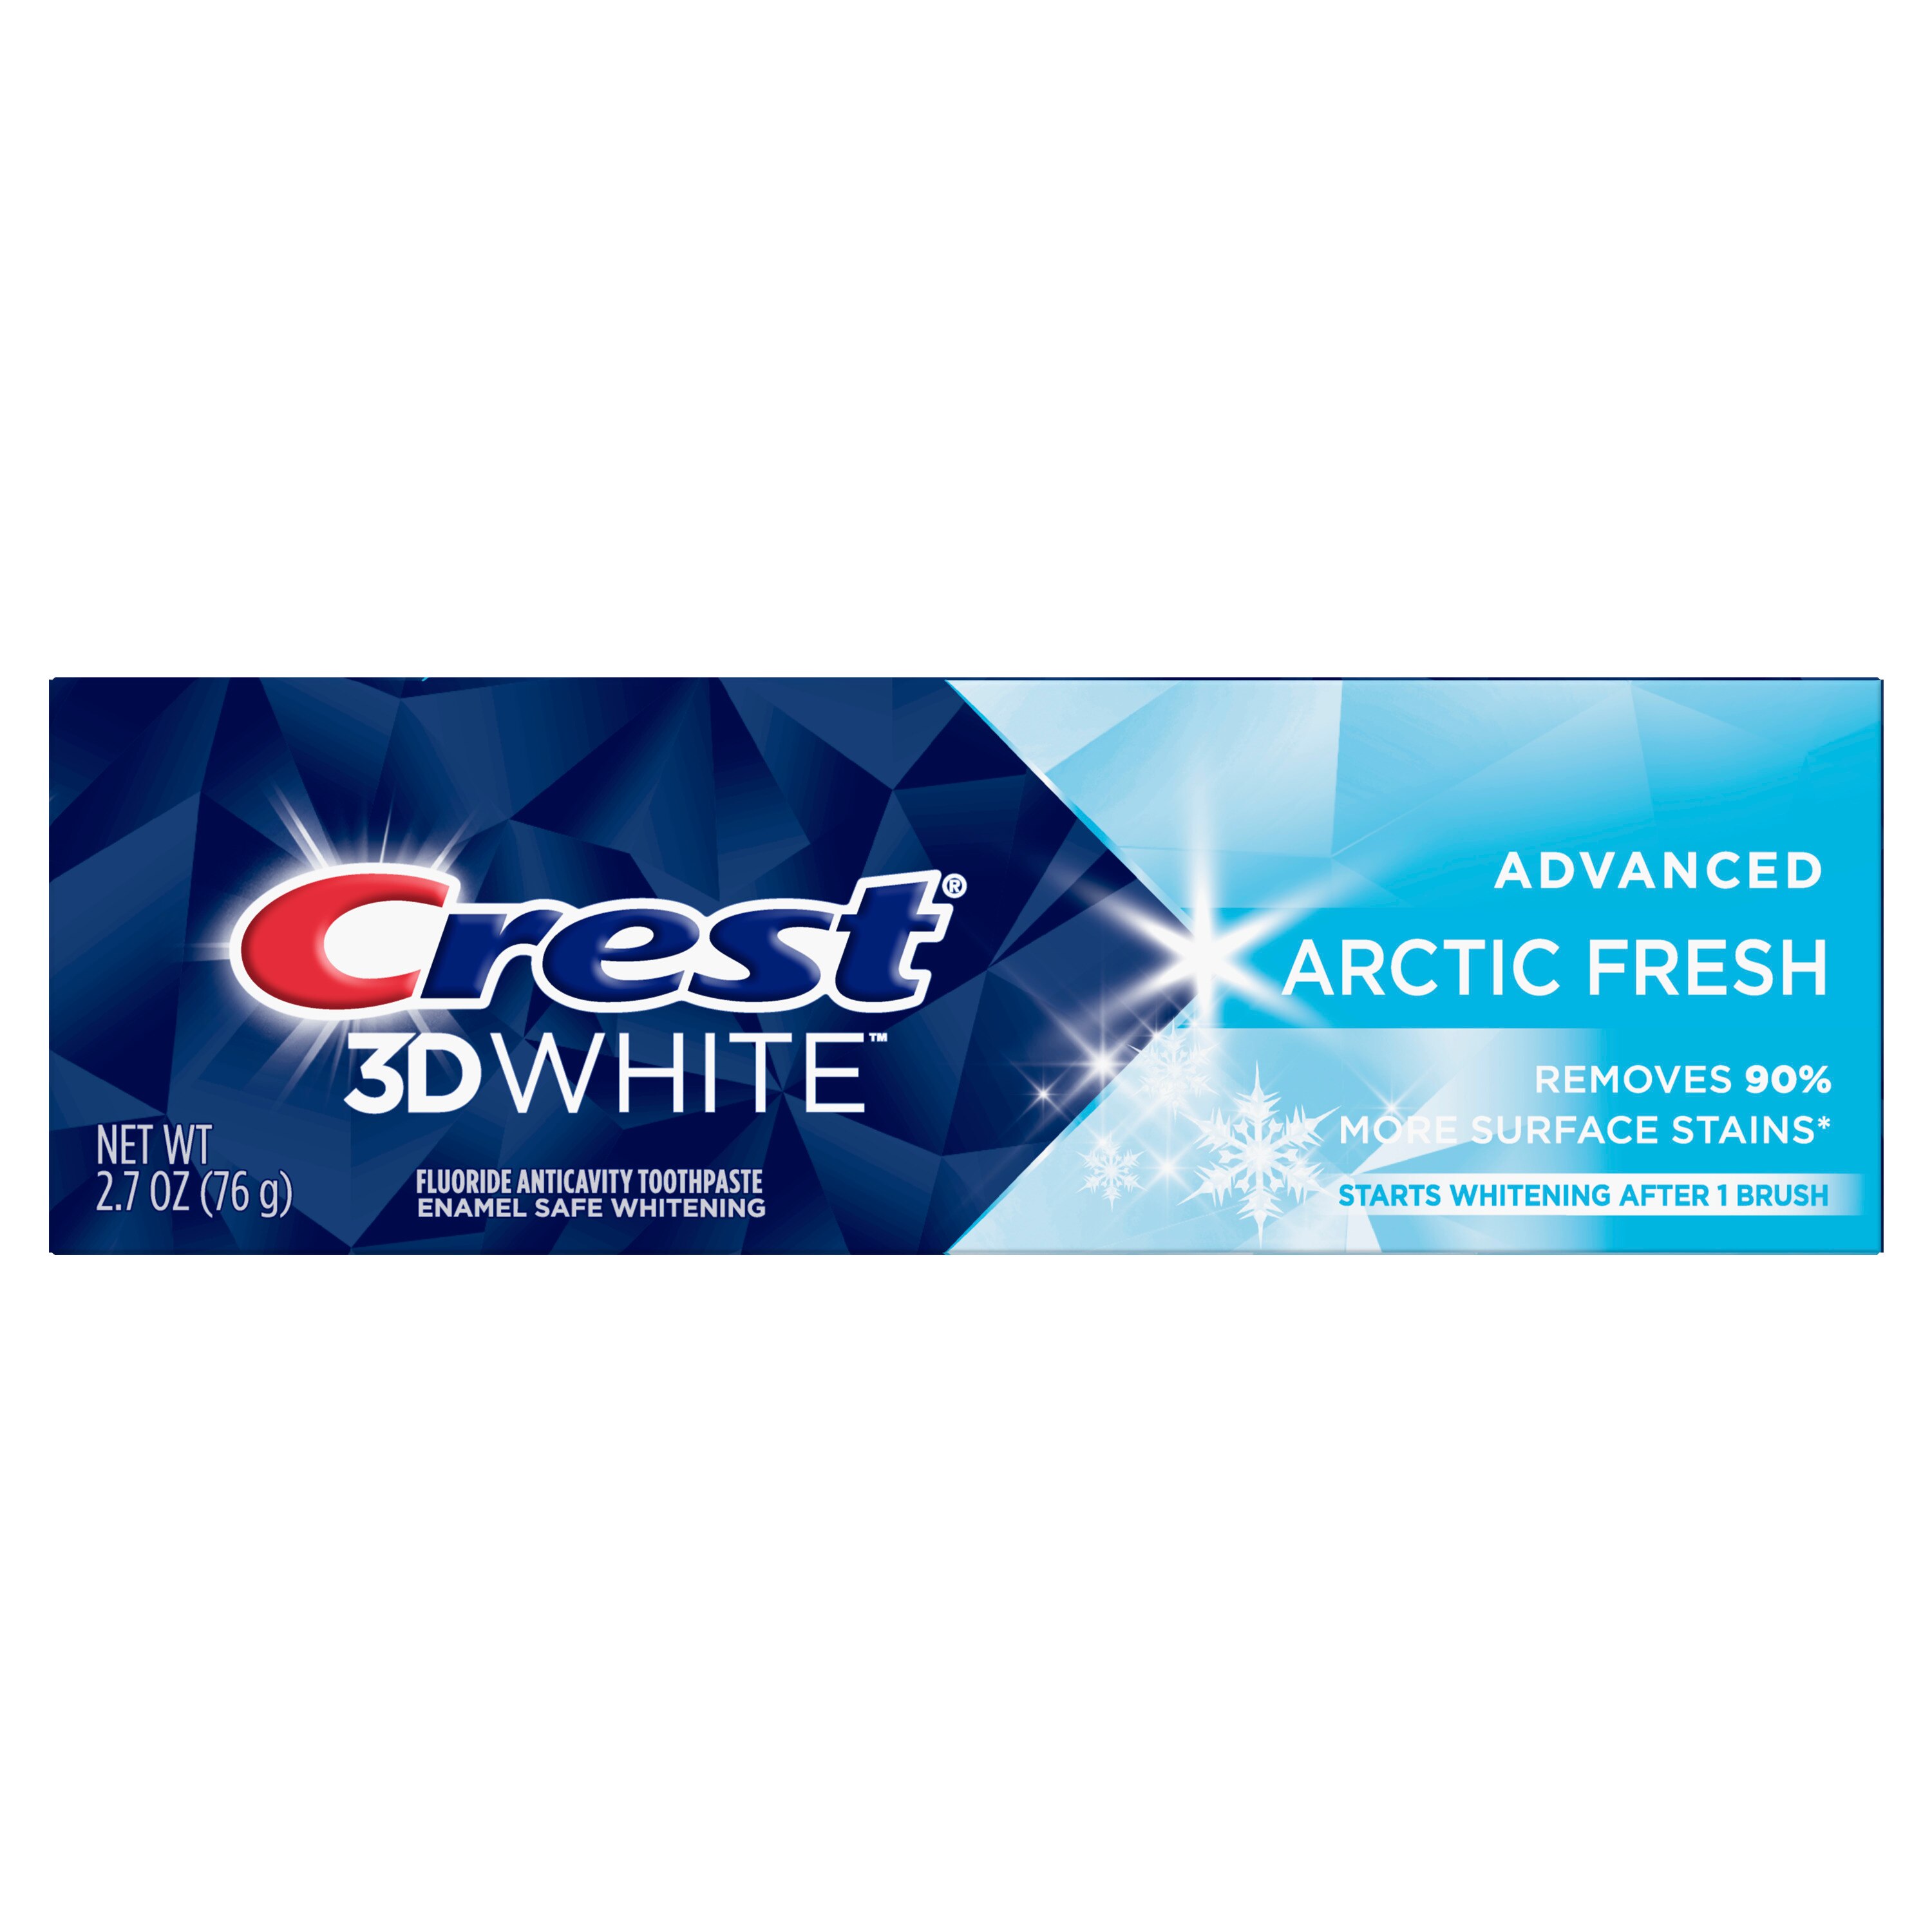 Crest 3D White Fluoride Anticavity Whitening Toothpaste, Advanced Artic Fresh